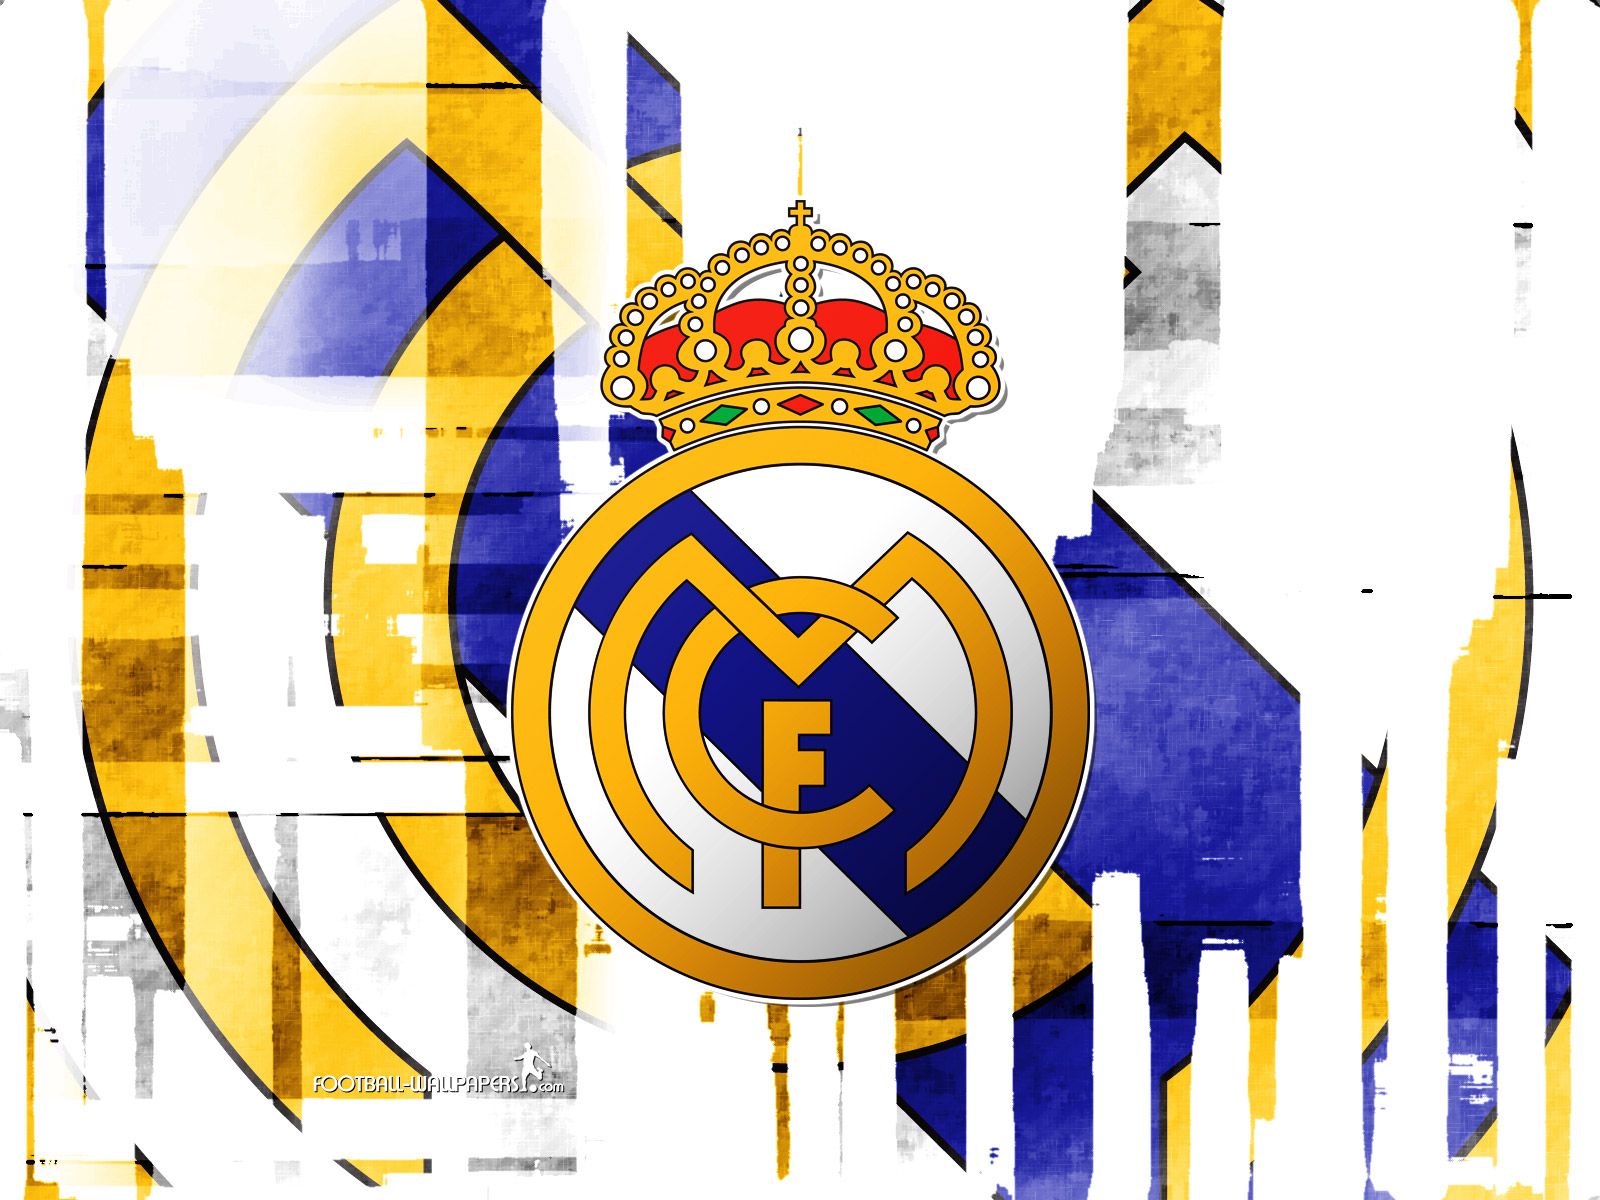 Real Madrid C.F. Wallpaper: Real Madrid. Real madrid wallpaper, Real madrid logo, Real madrid vs levante